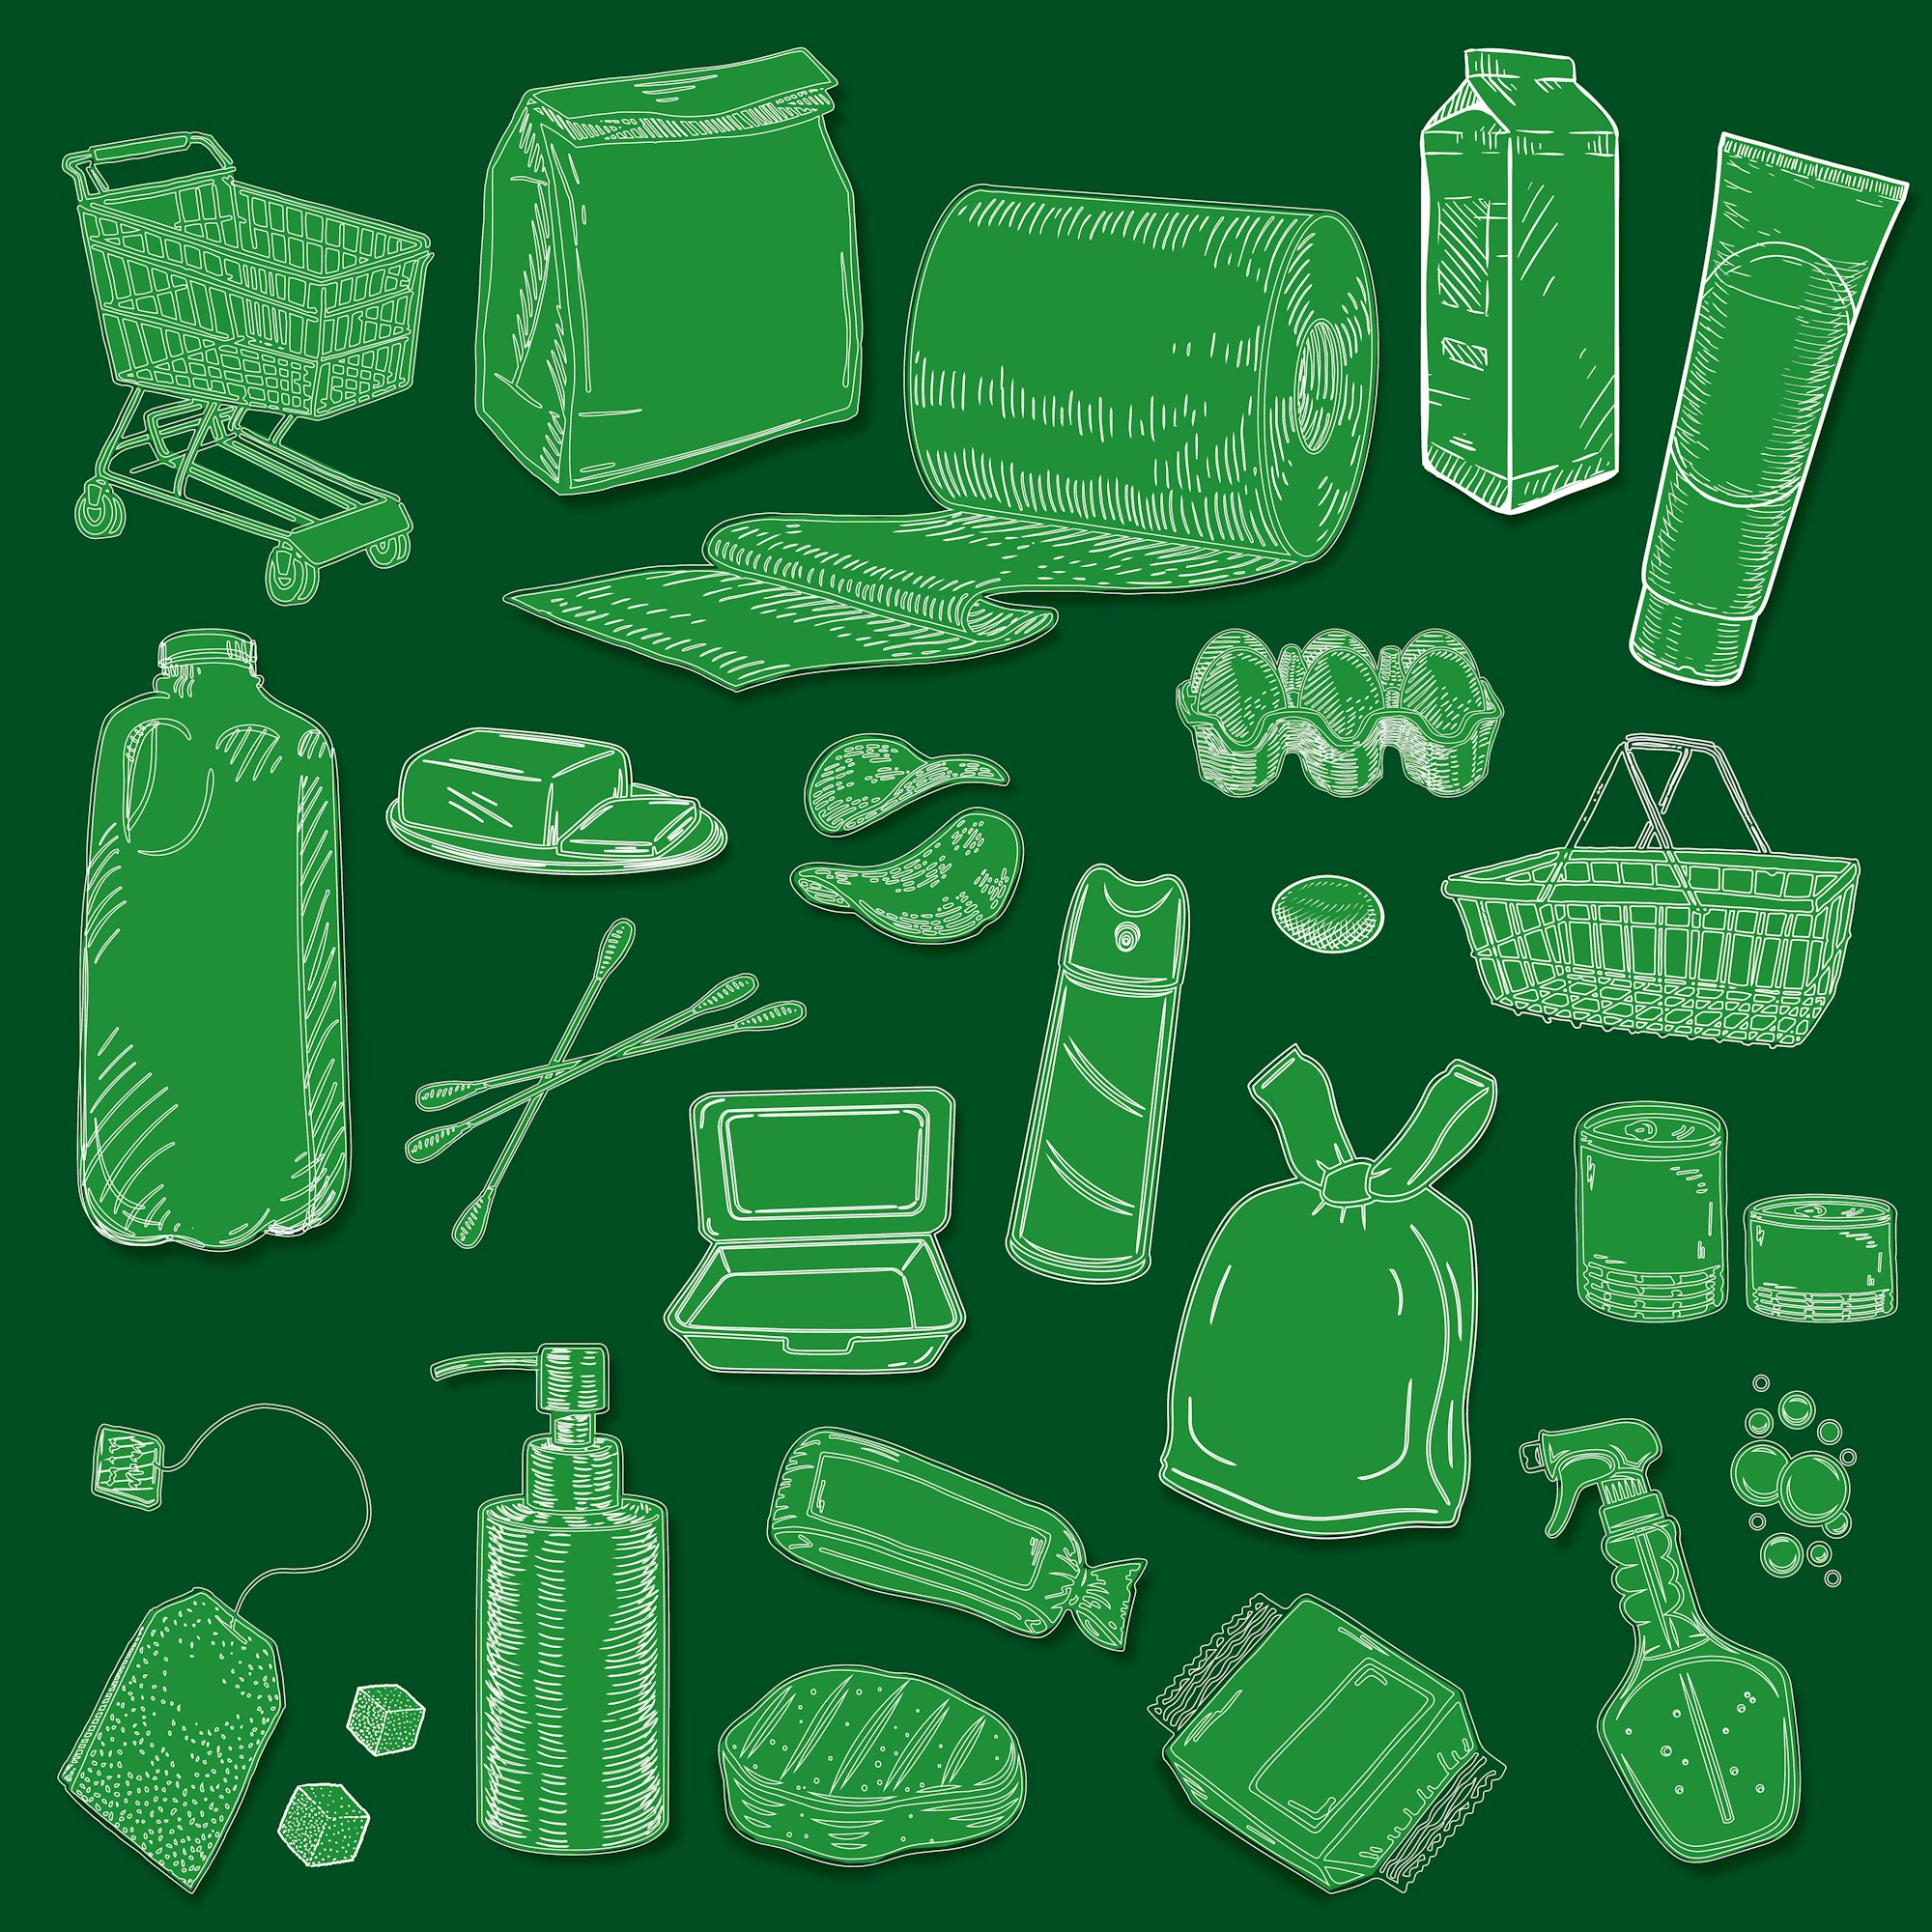 Image of greenwashing icons